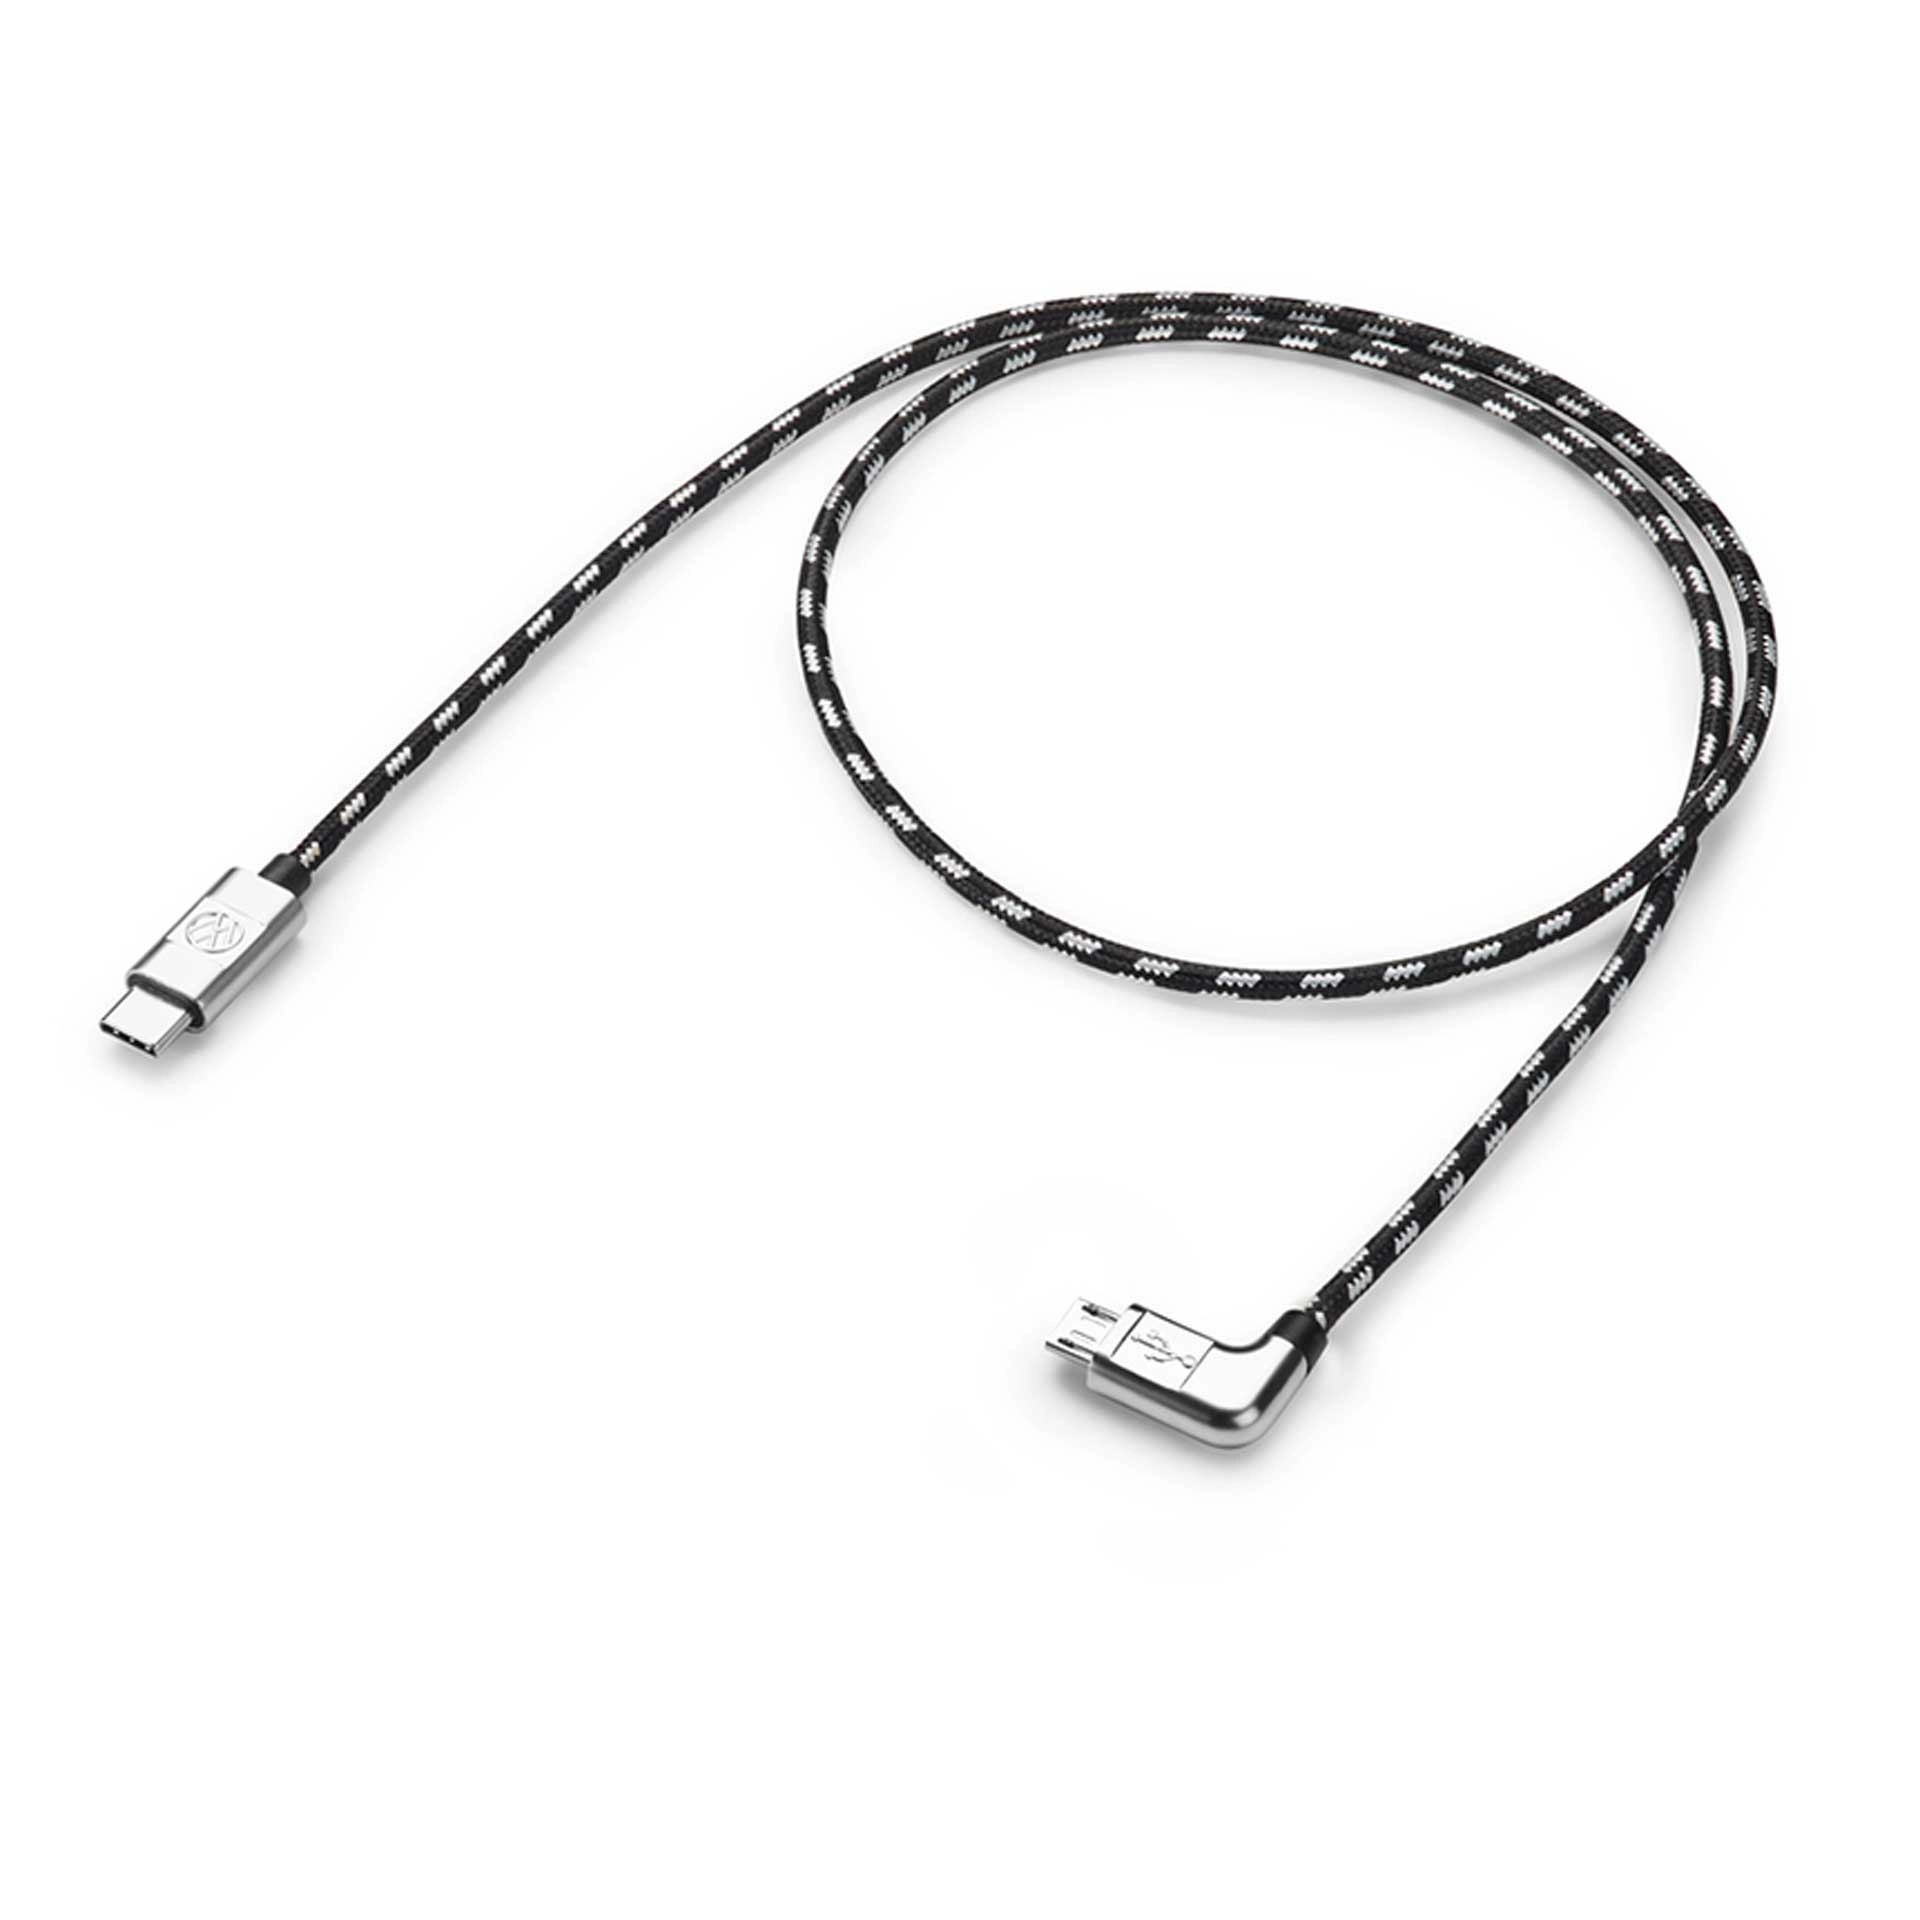 Volkswagen Anschlusskabel Ladekabel USB-C auf Micro-USB 70 cm 000051446BA